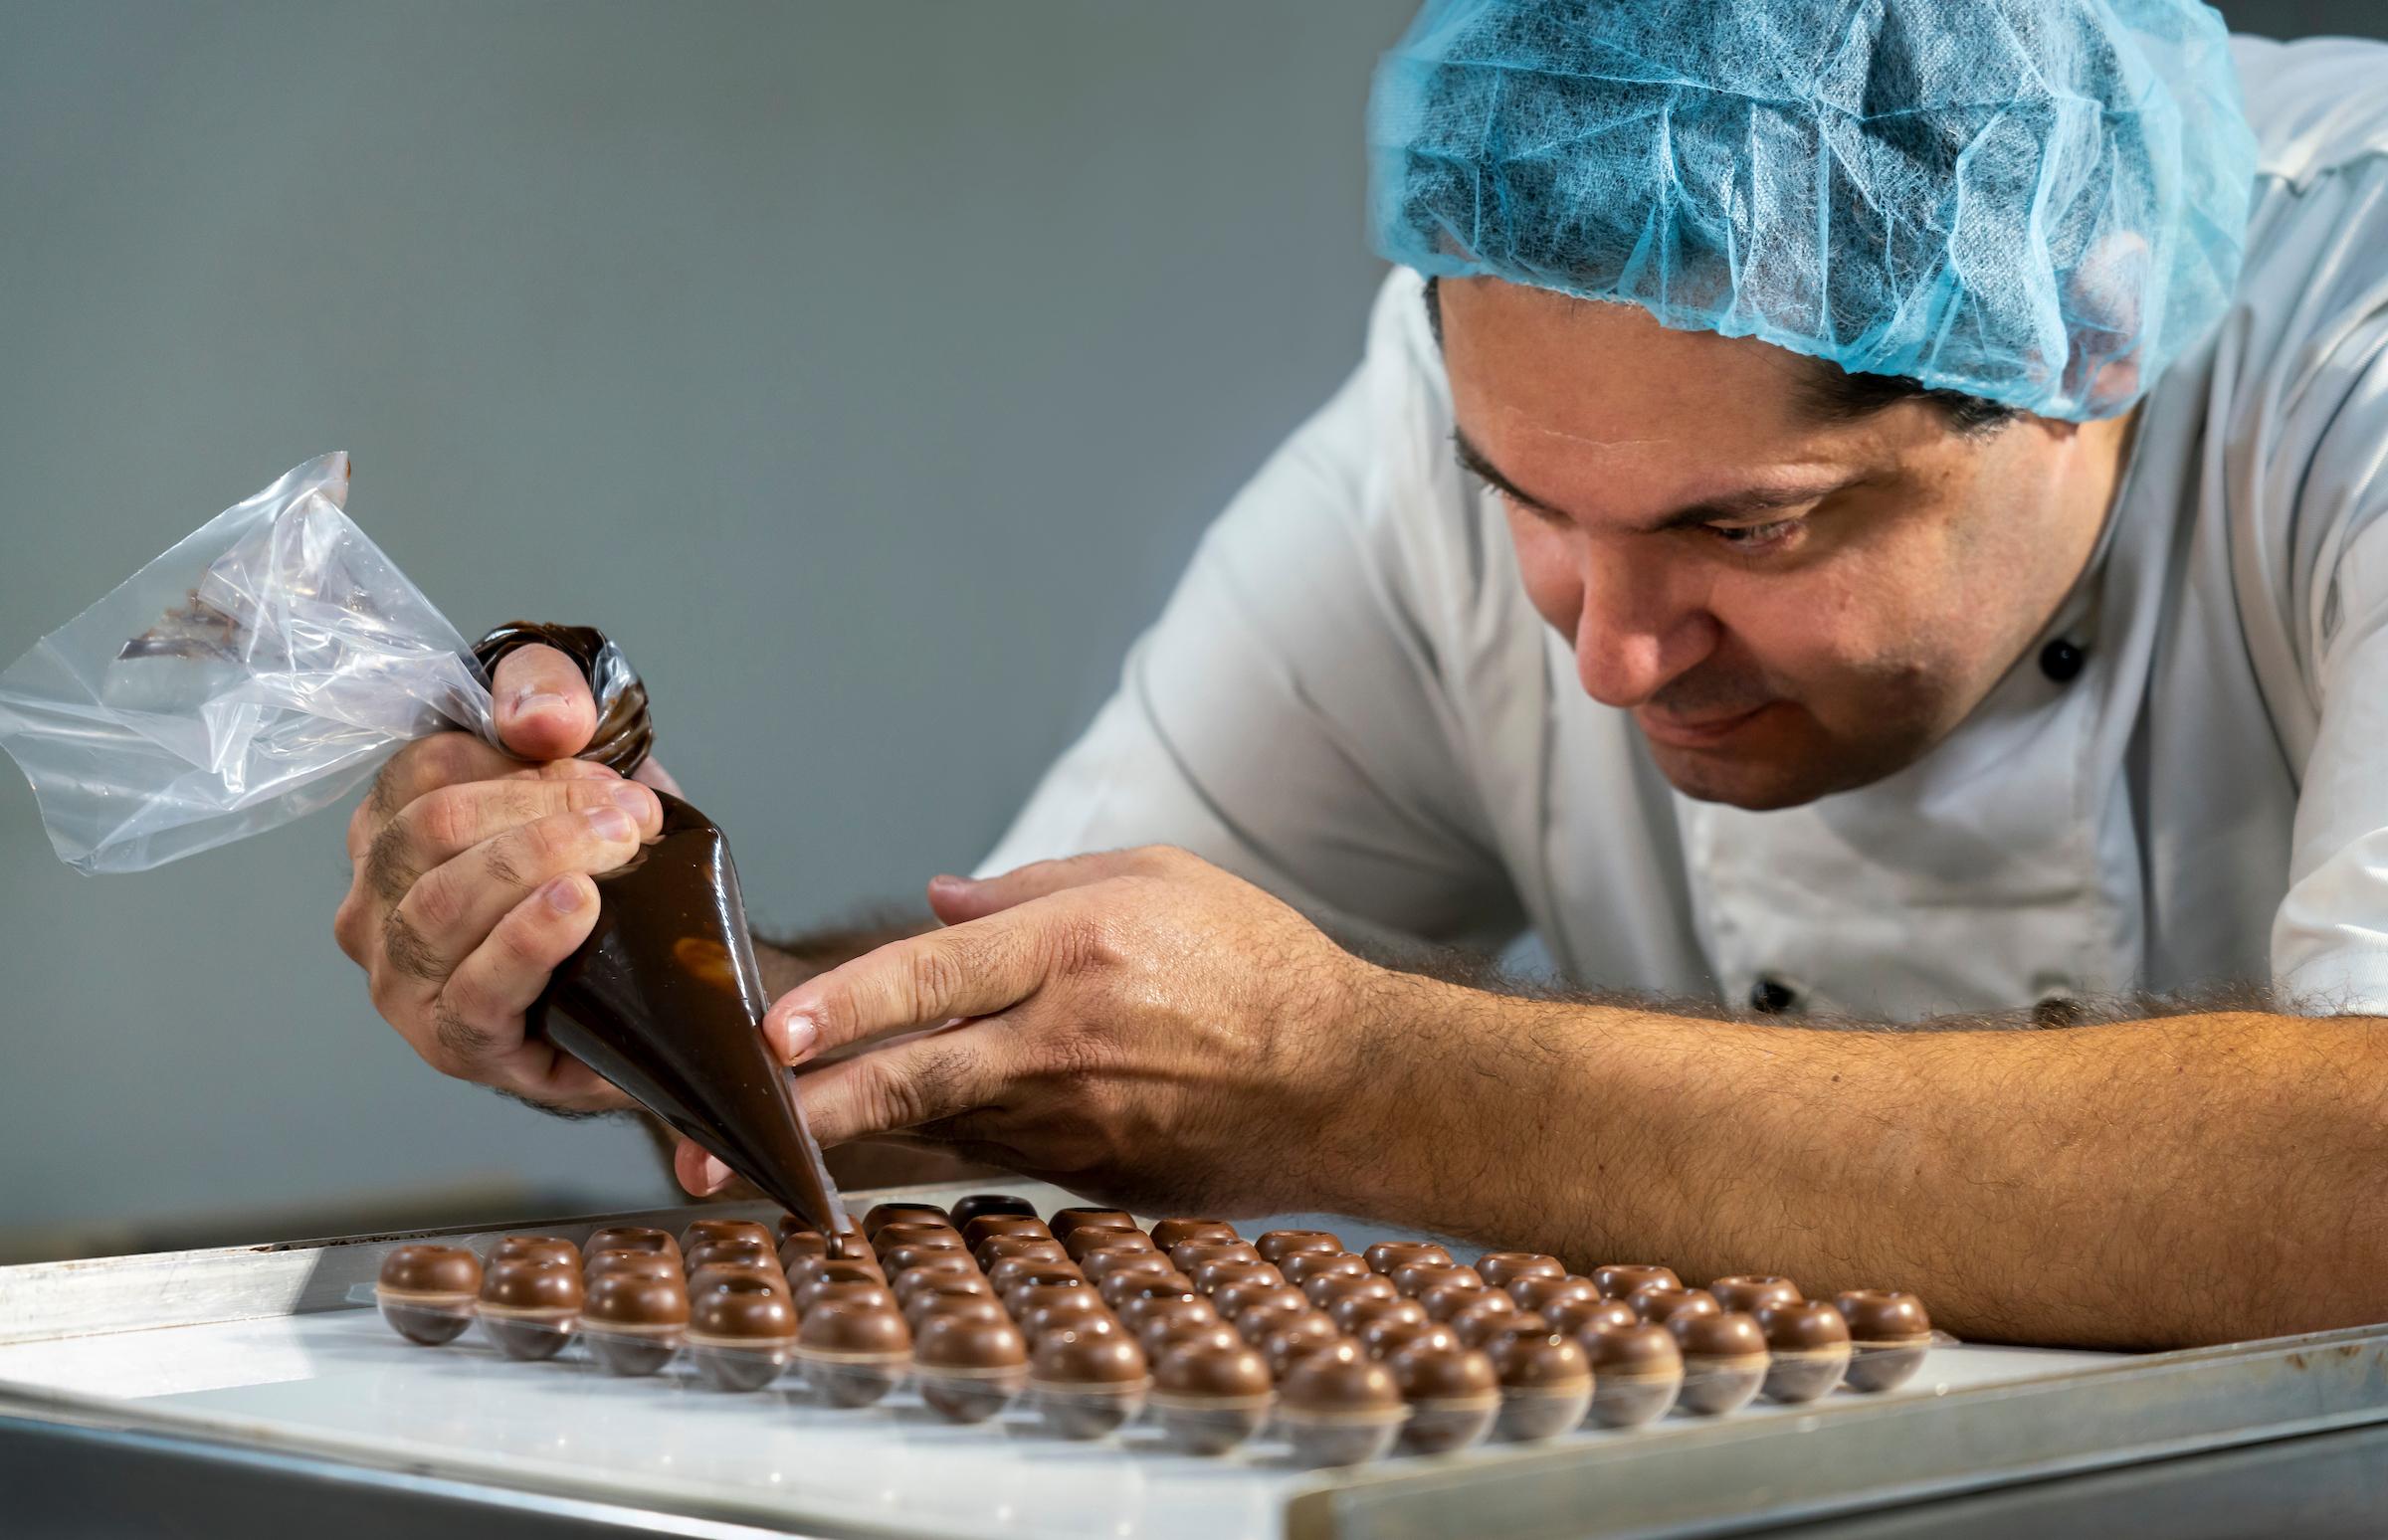 Davies Chocolates worker piping liquid chocolate onto chocolates